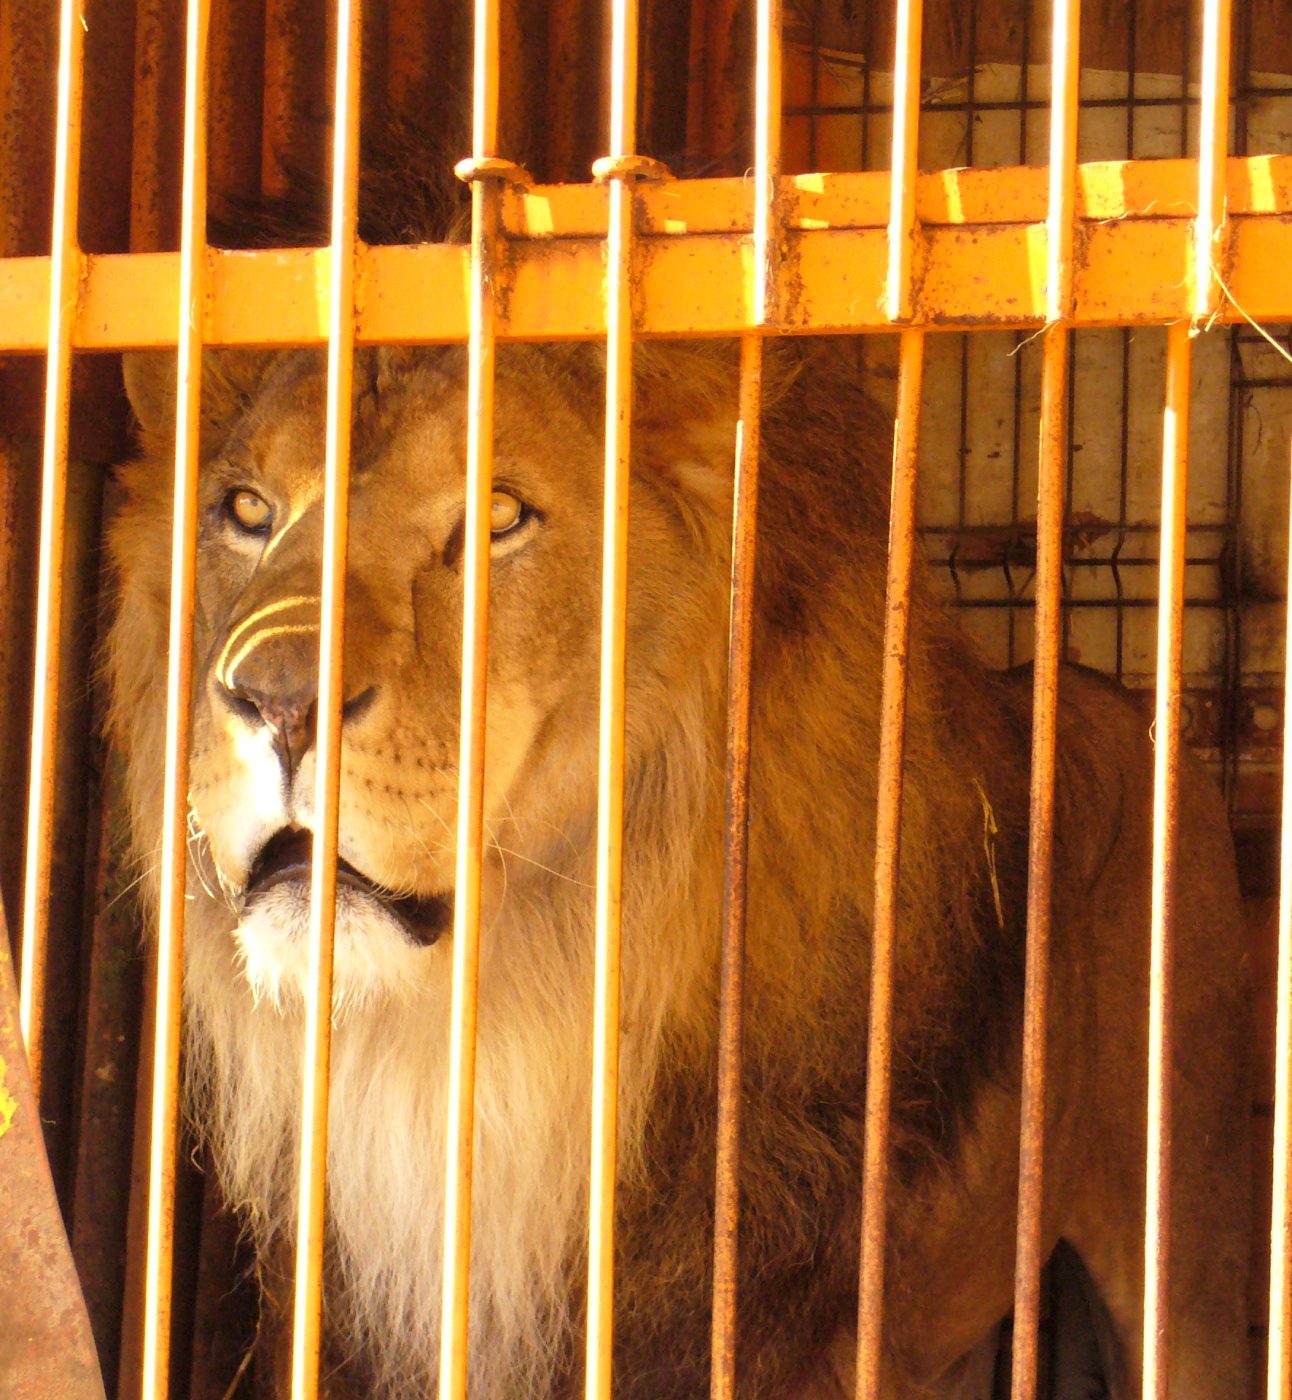 A lion behind bars